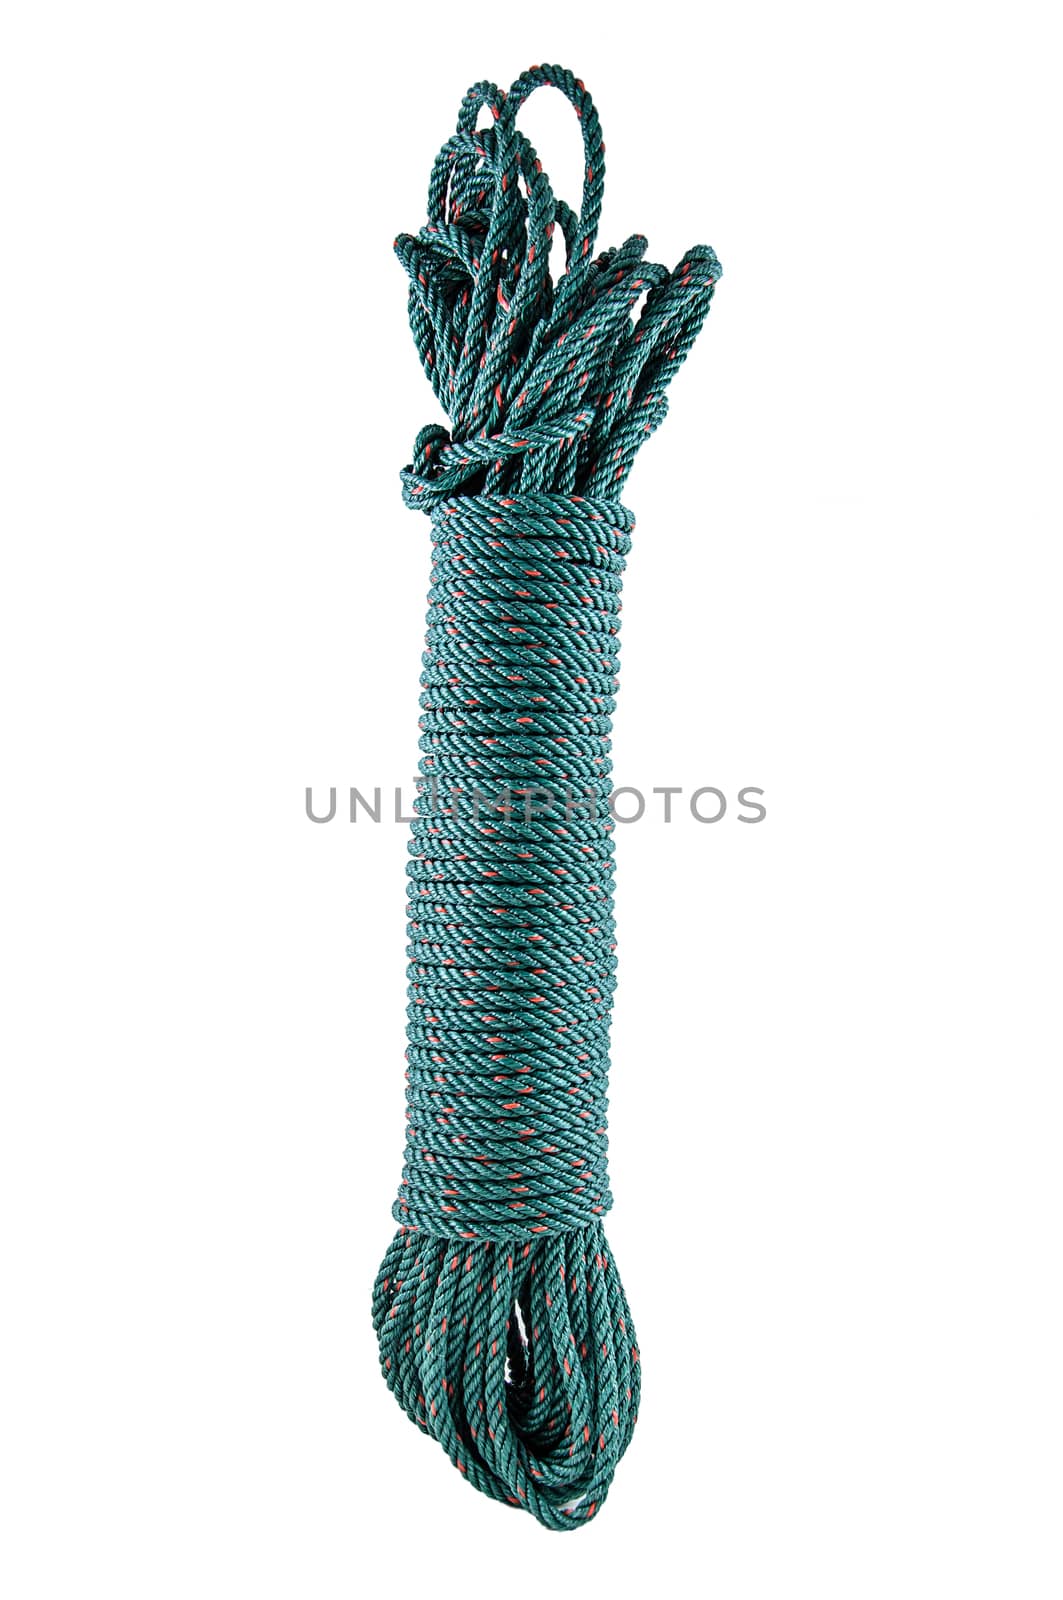 Green nylon rope by NuwatPhoto